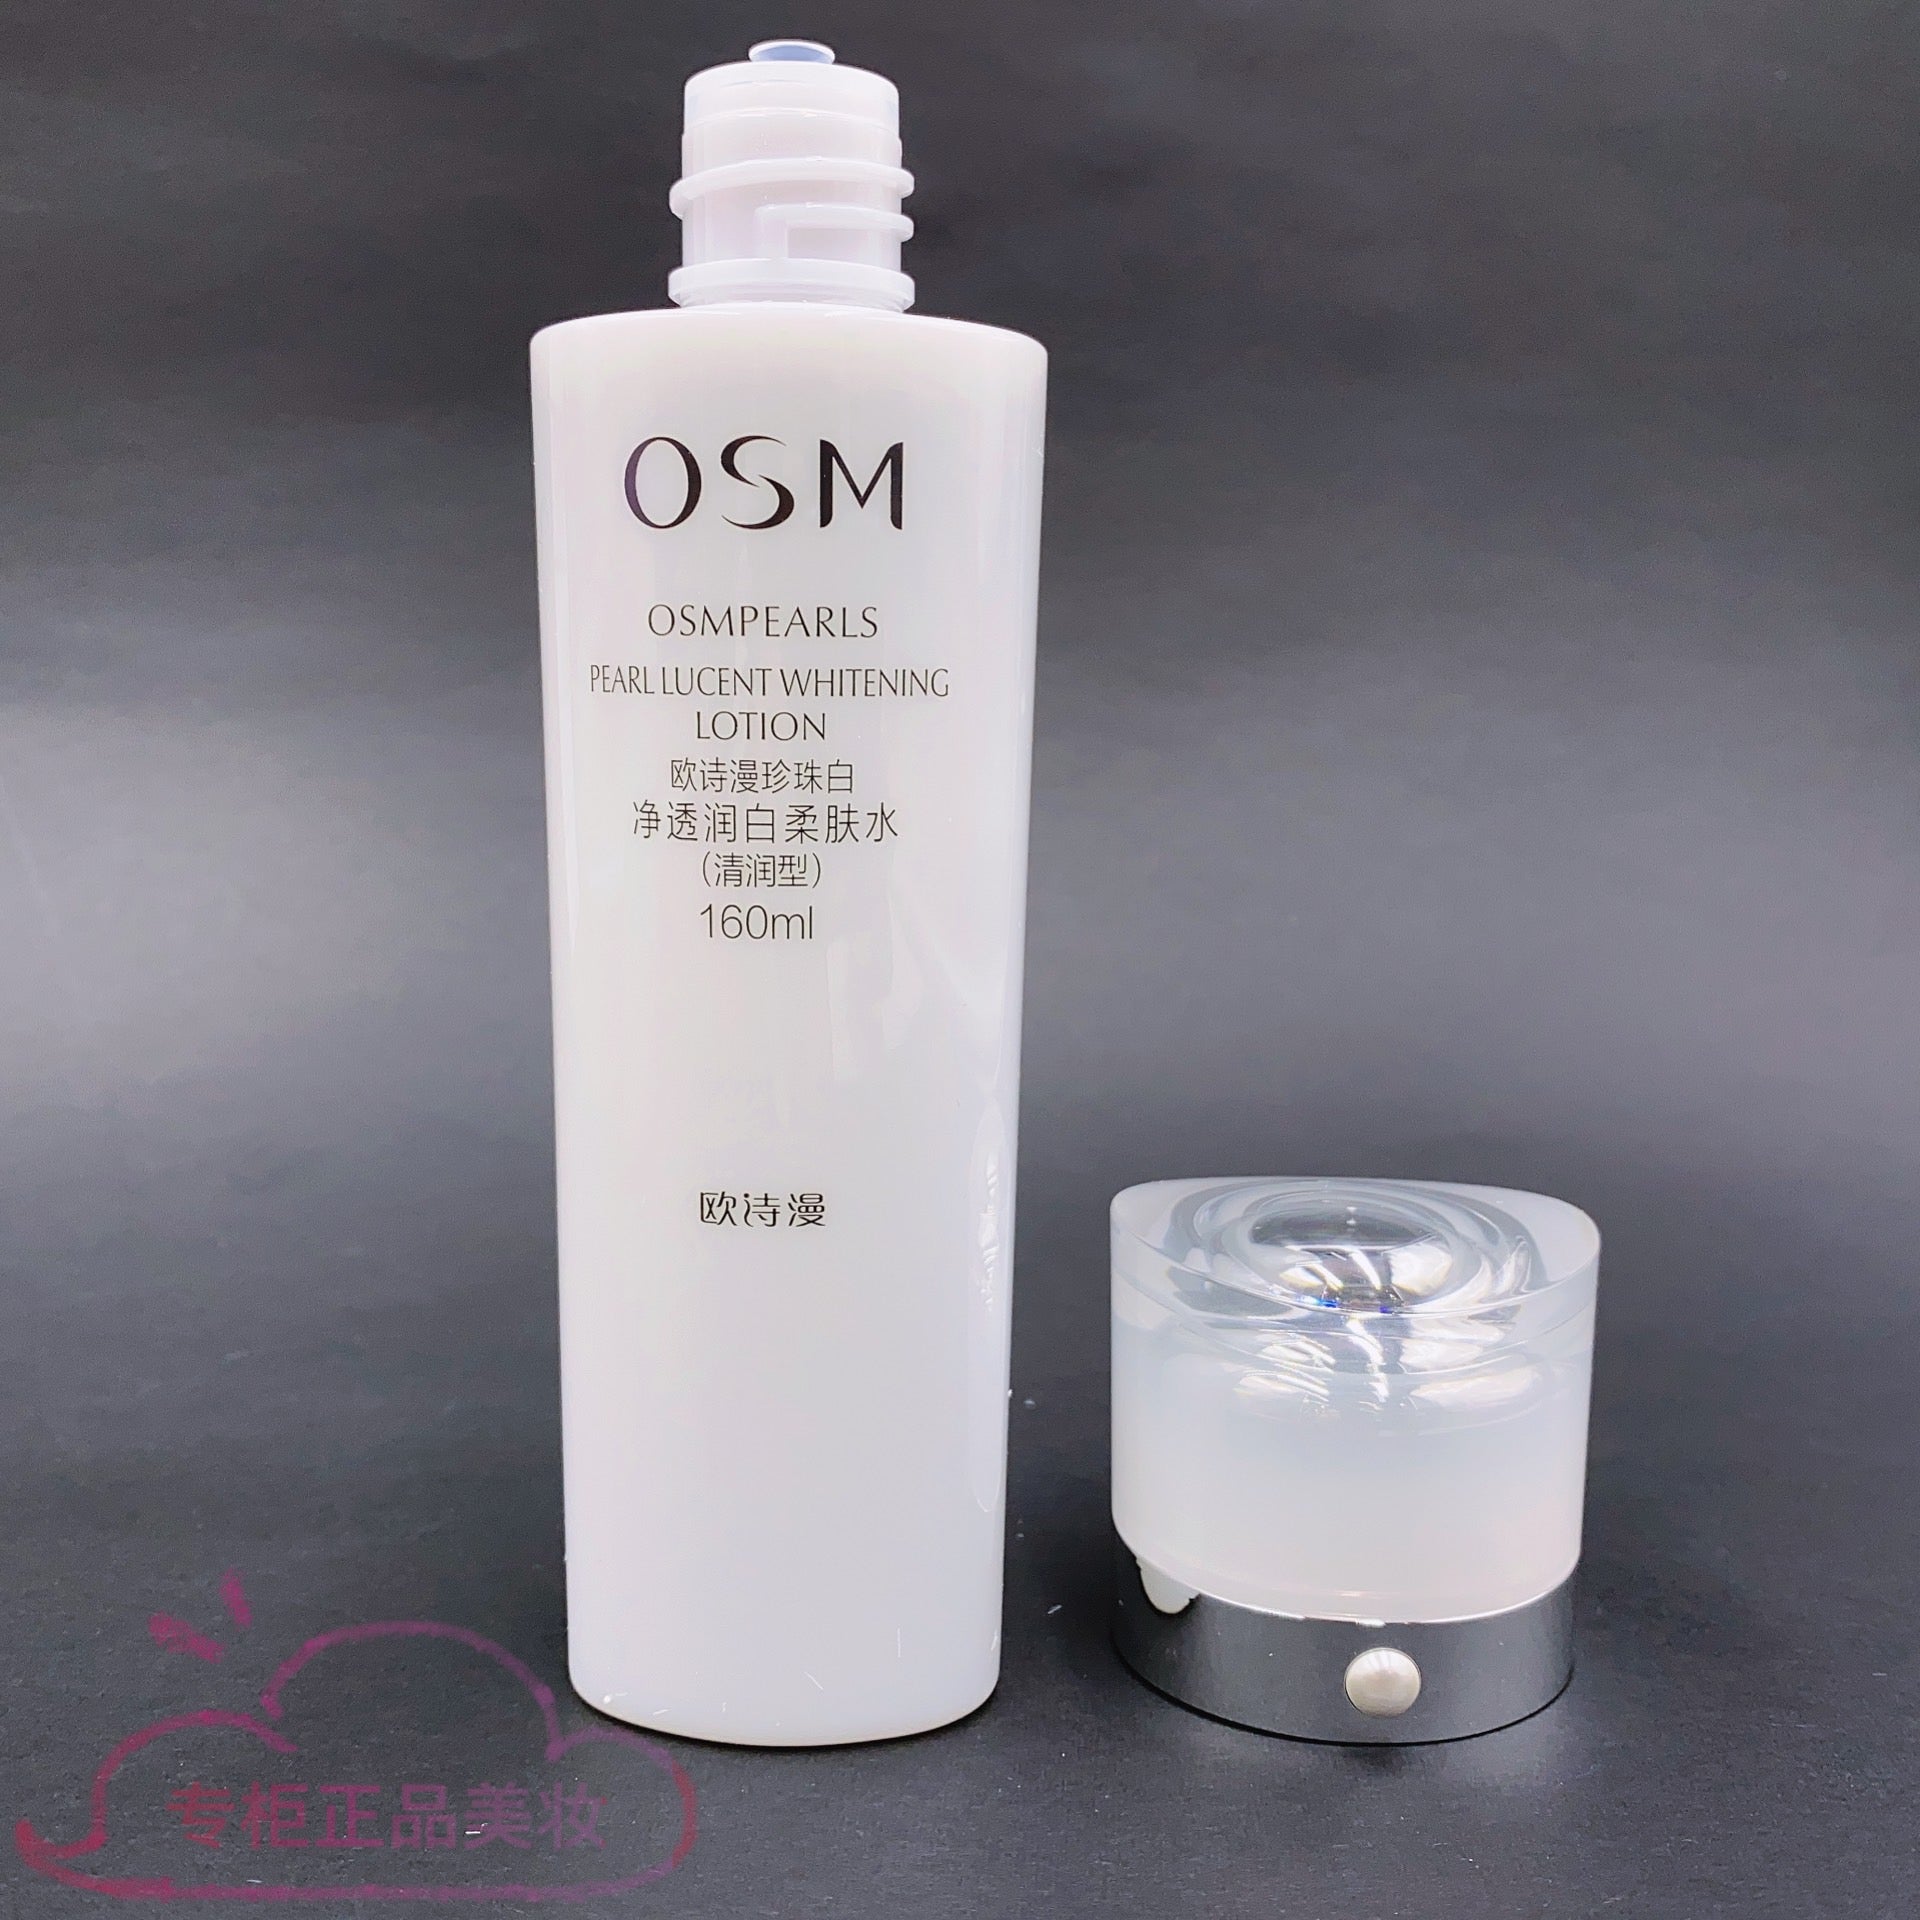 OSM Pearl Lucent Whitening Lotion 160ml 欧诗漫珍珠白净透润白柔肤水